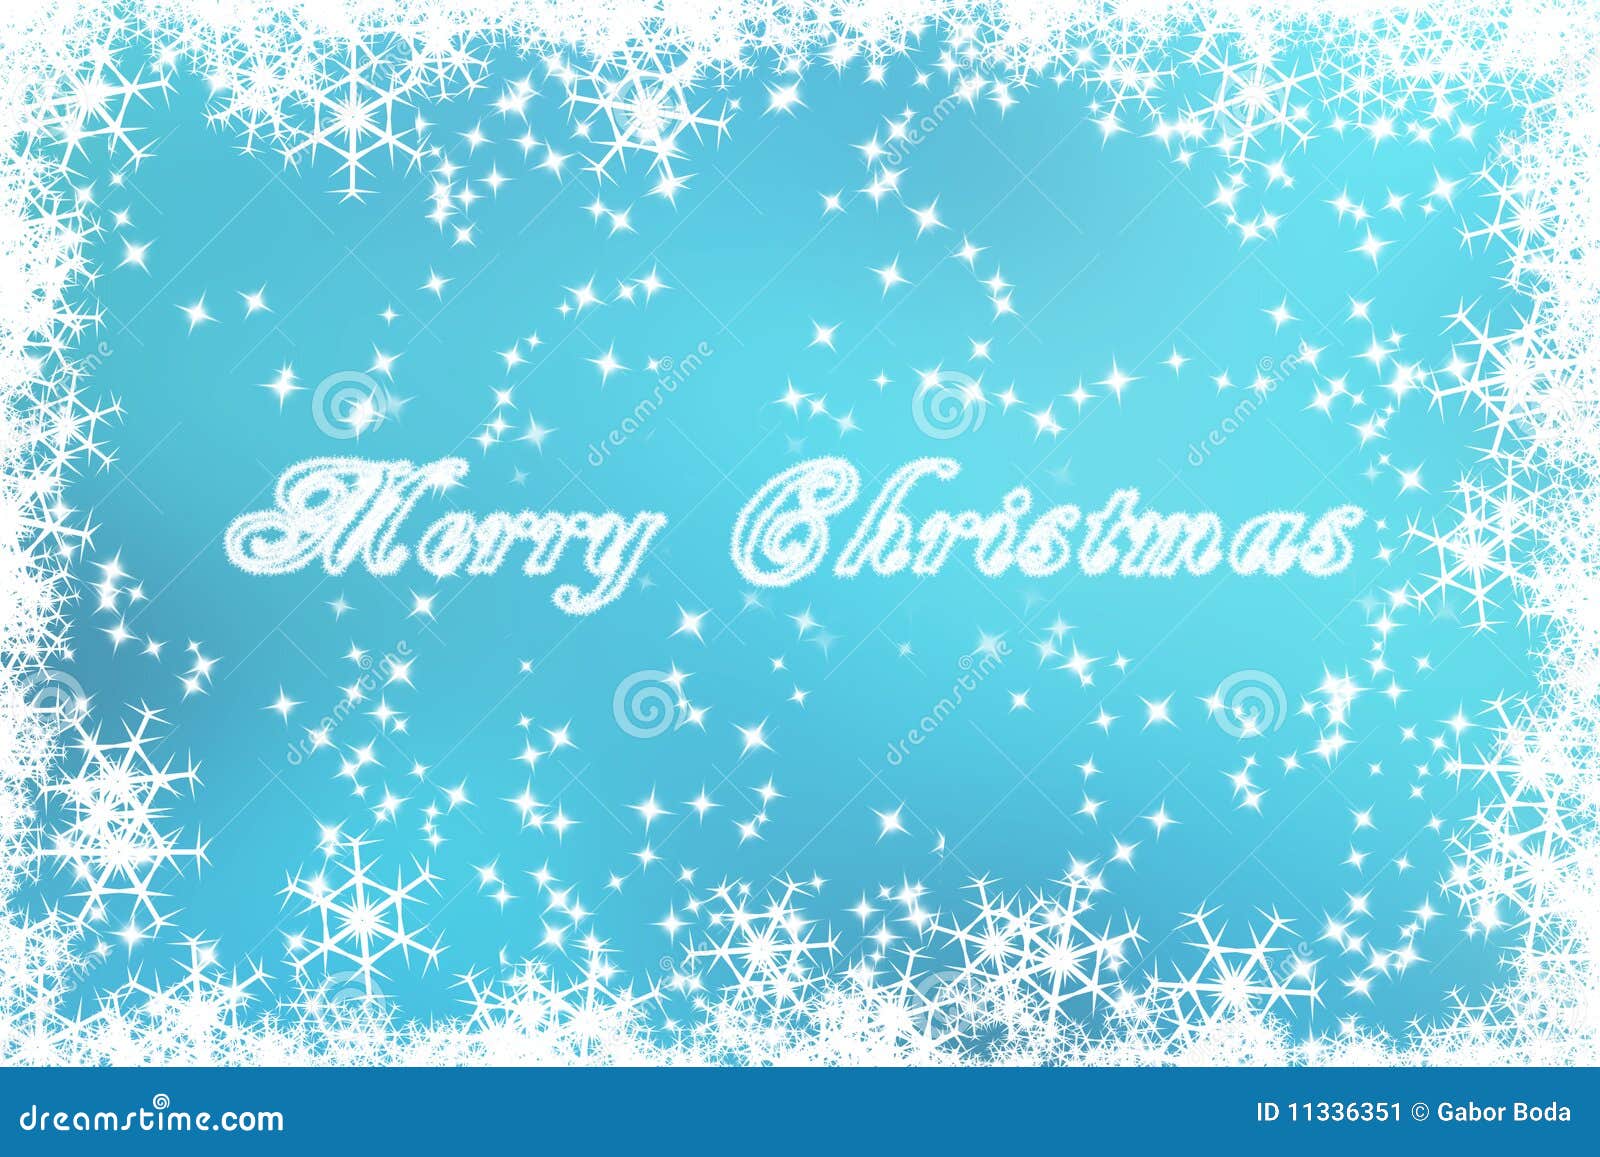 Frozen Dream Christmas Card Stock Illustration - Image 